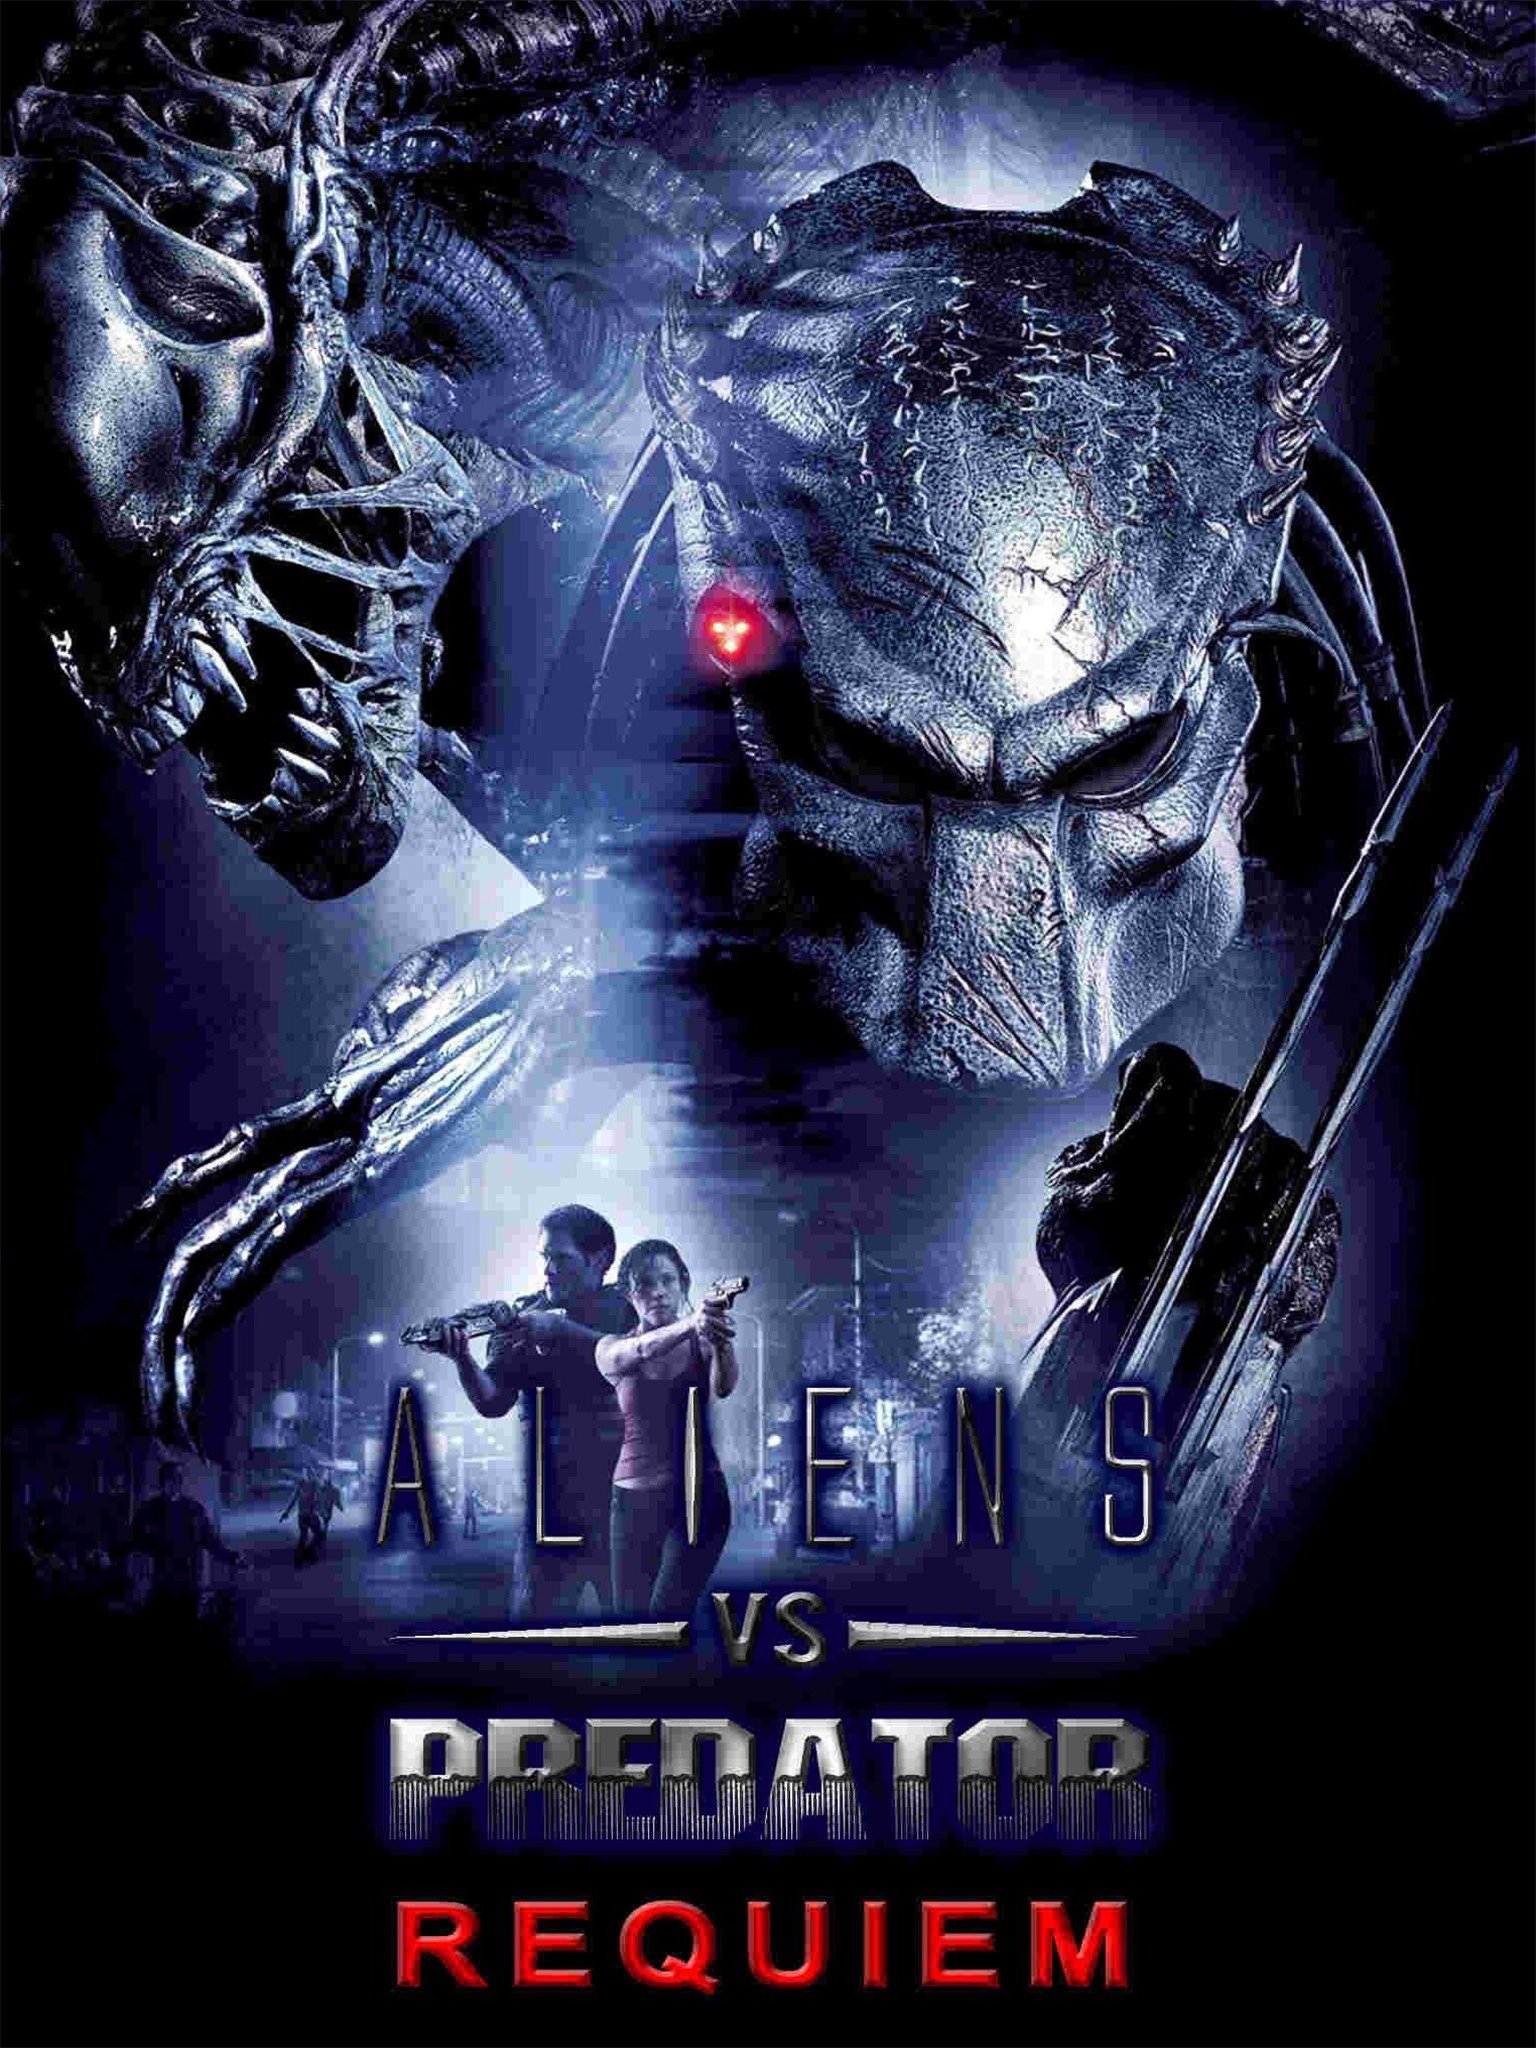 Alien vs predator 3 full movie watch online in english Aliens Vs Predator Requiem 2007 Rotten Tomatoes